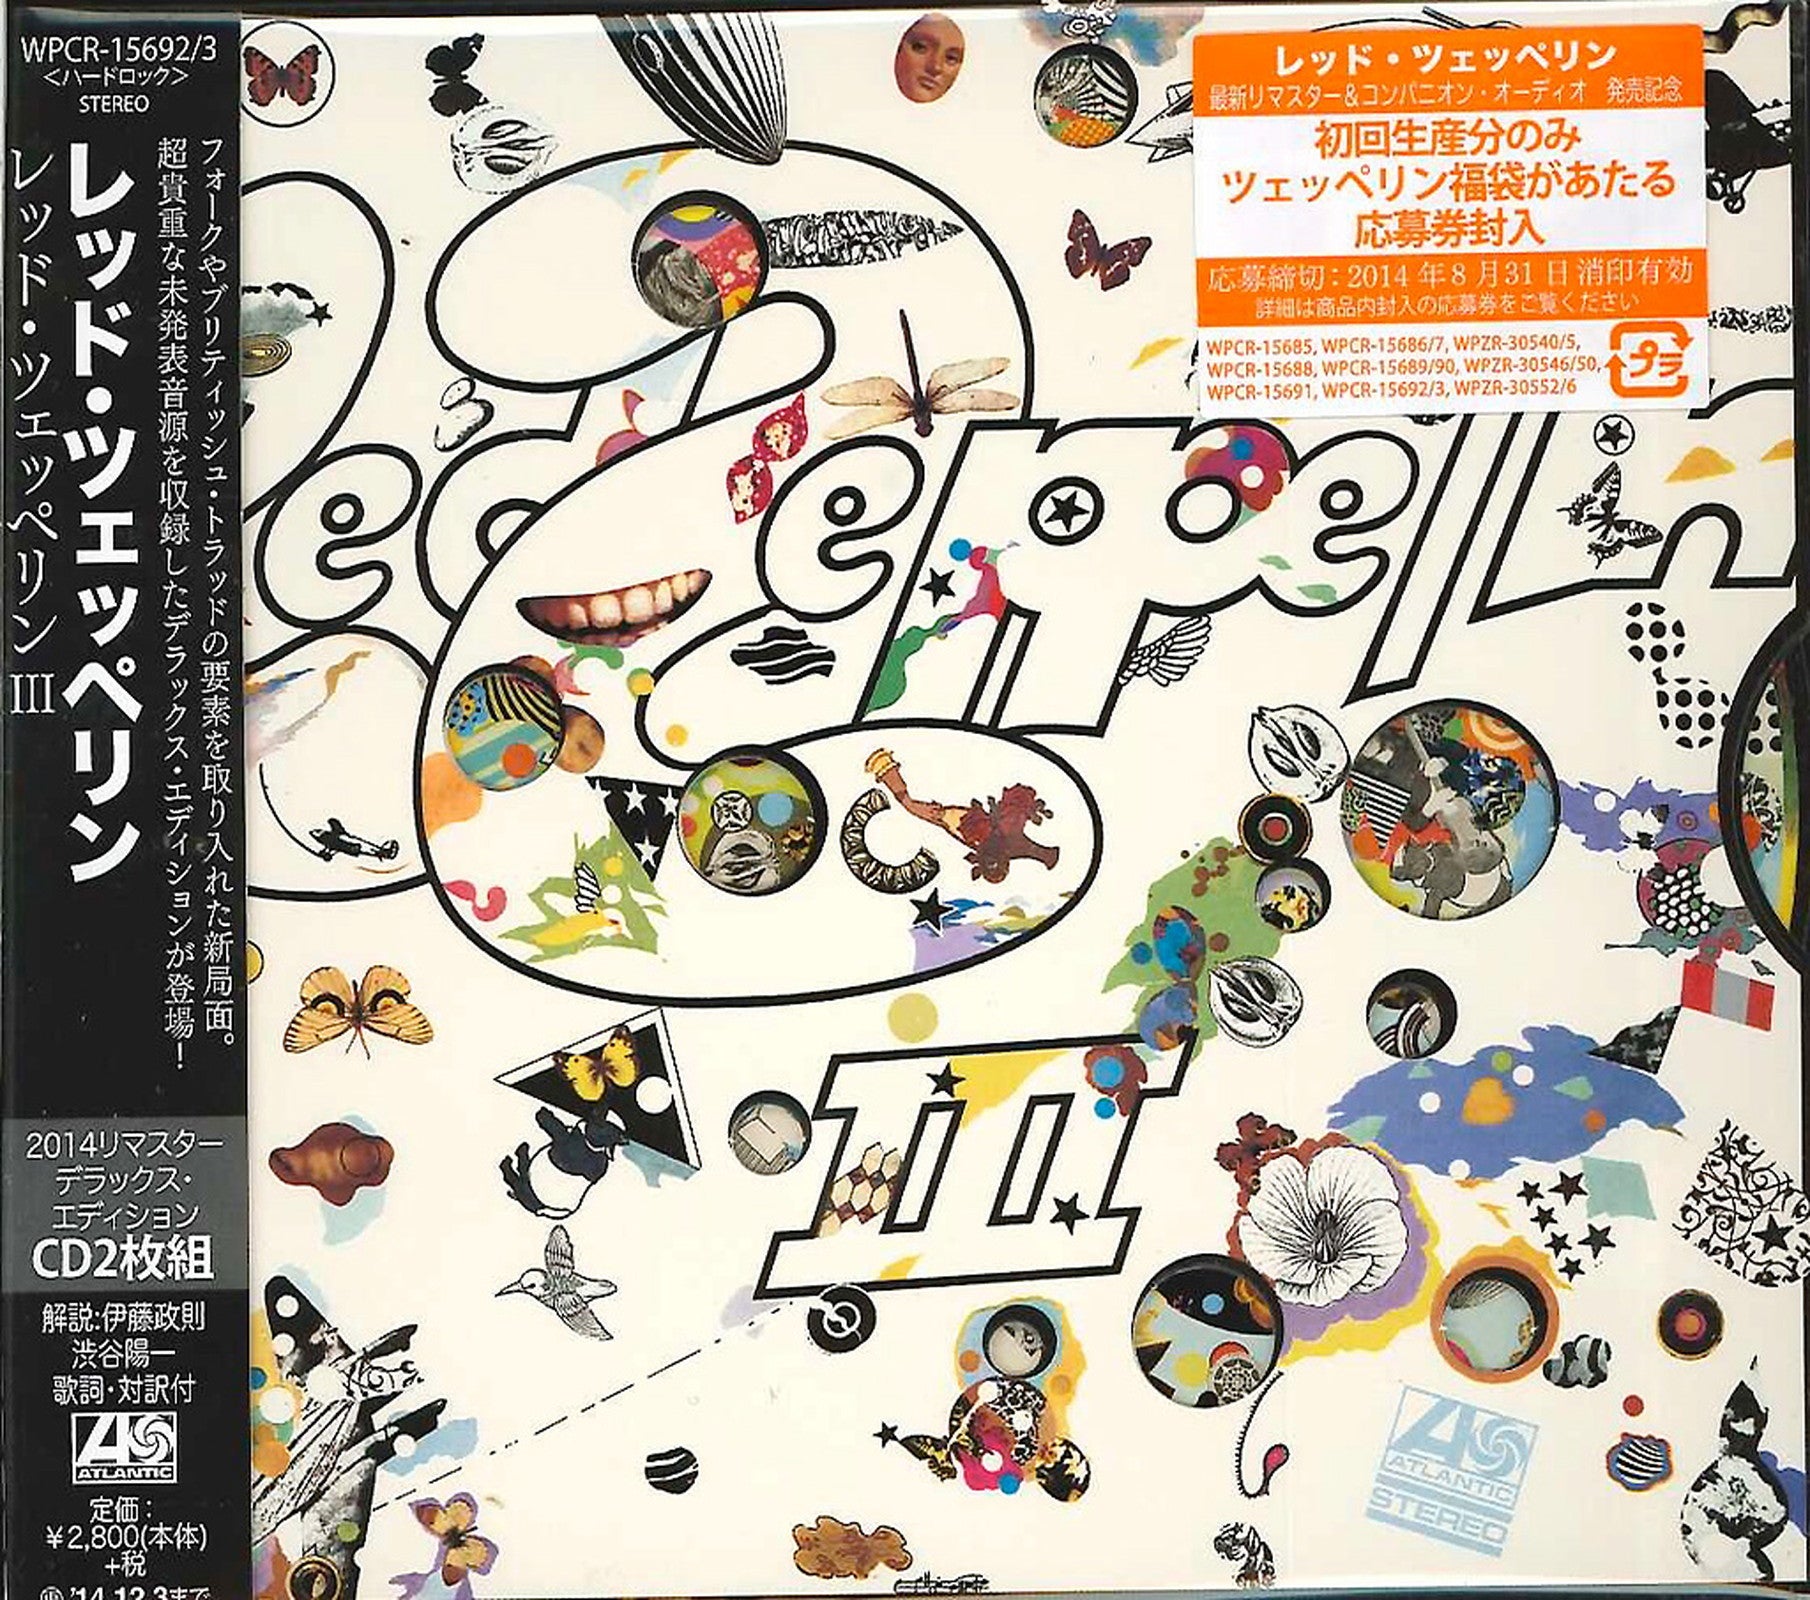 Led Led Zeppelin Iii Deluxe Edition - Japan 2 CD - CDs Vinyl Japan